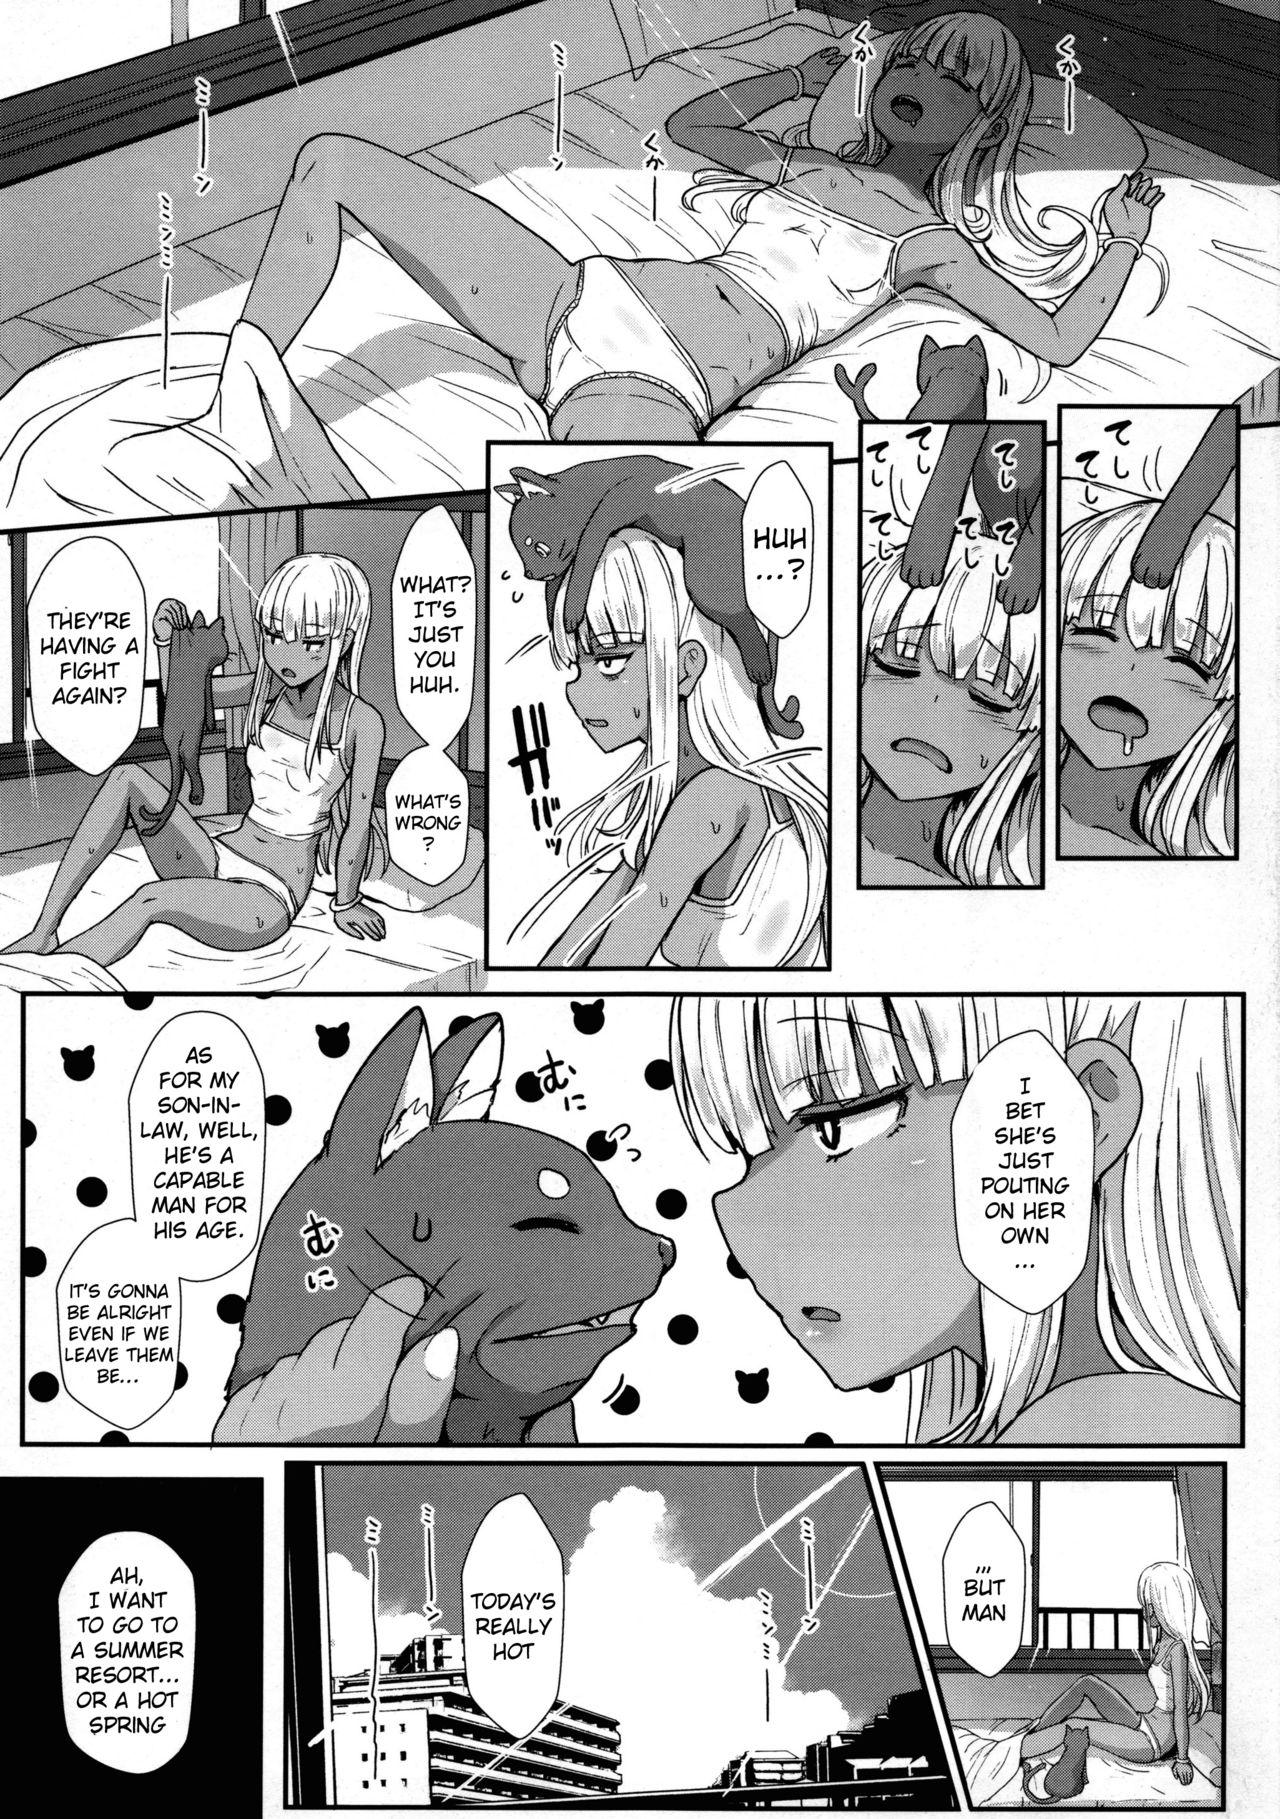 Good LiLiM's kiss - Original Her - Page 2